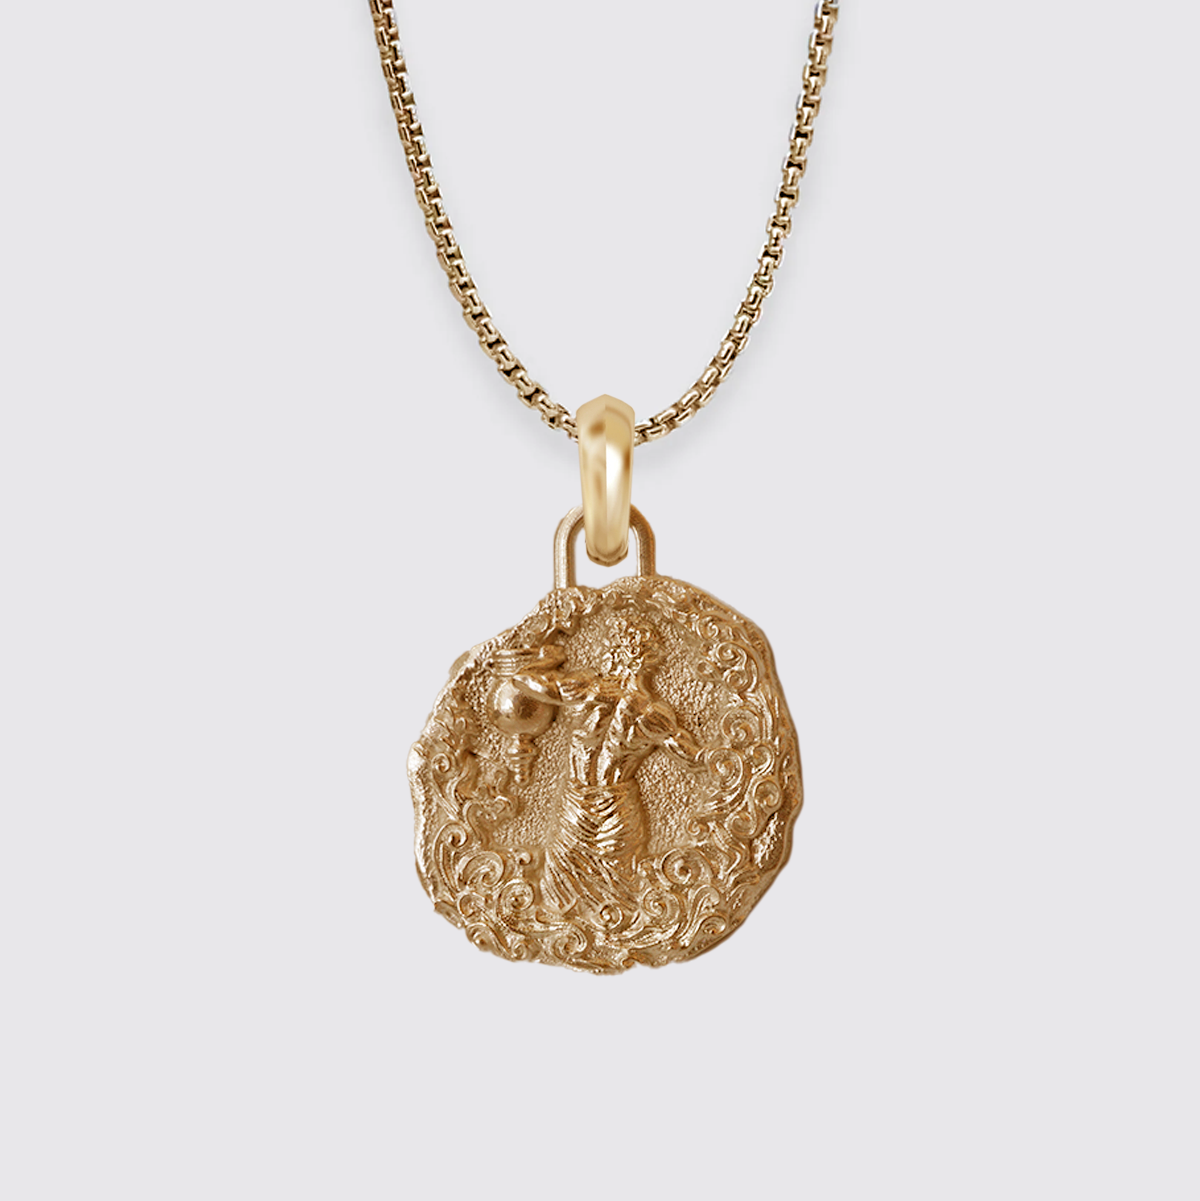 Aquarius Zodiac Pendant in Sterling Silver and 14K Gold